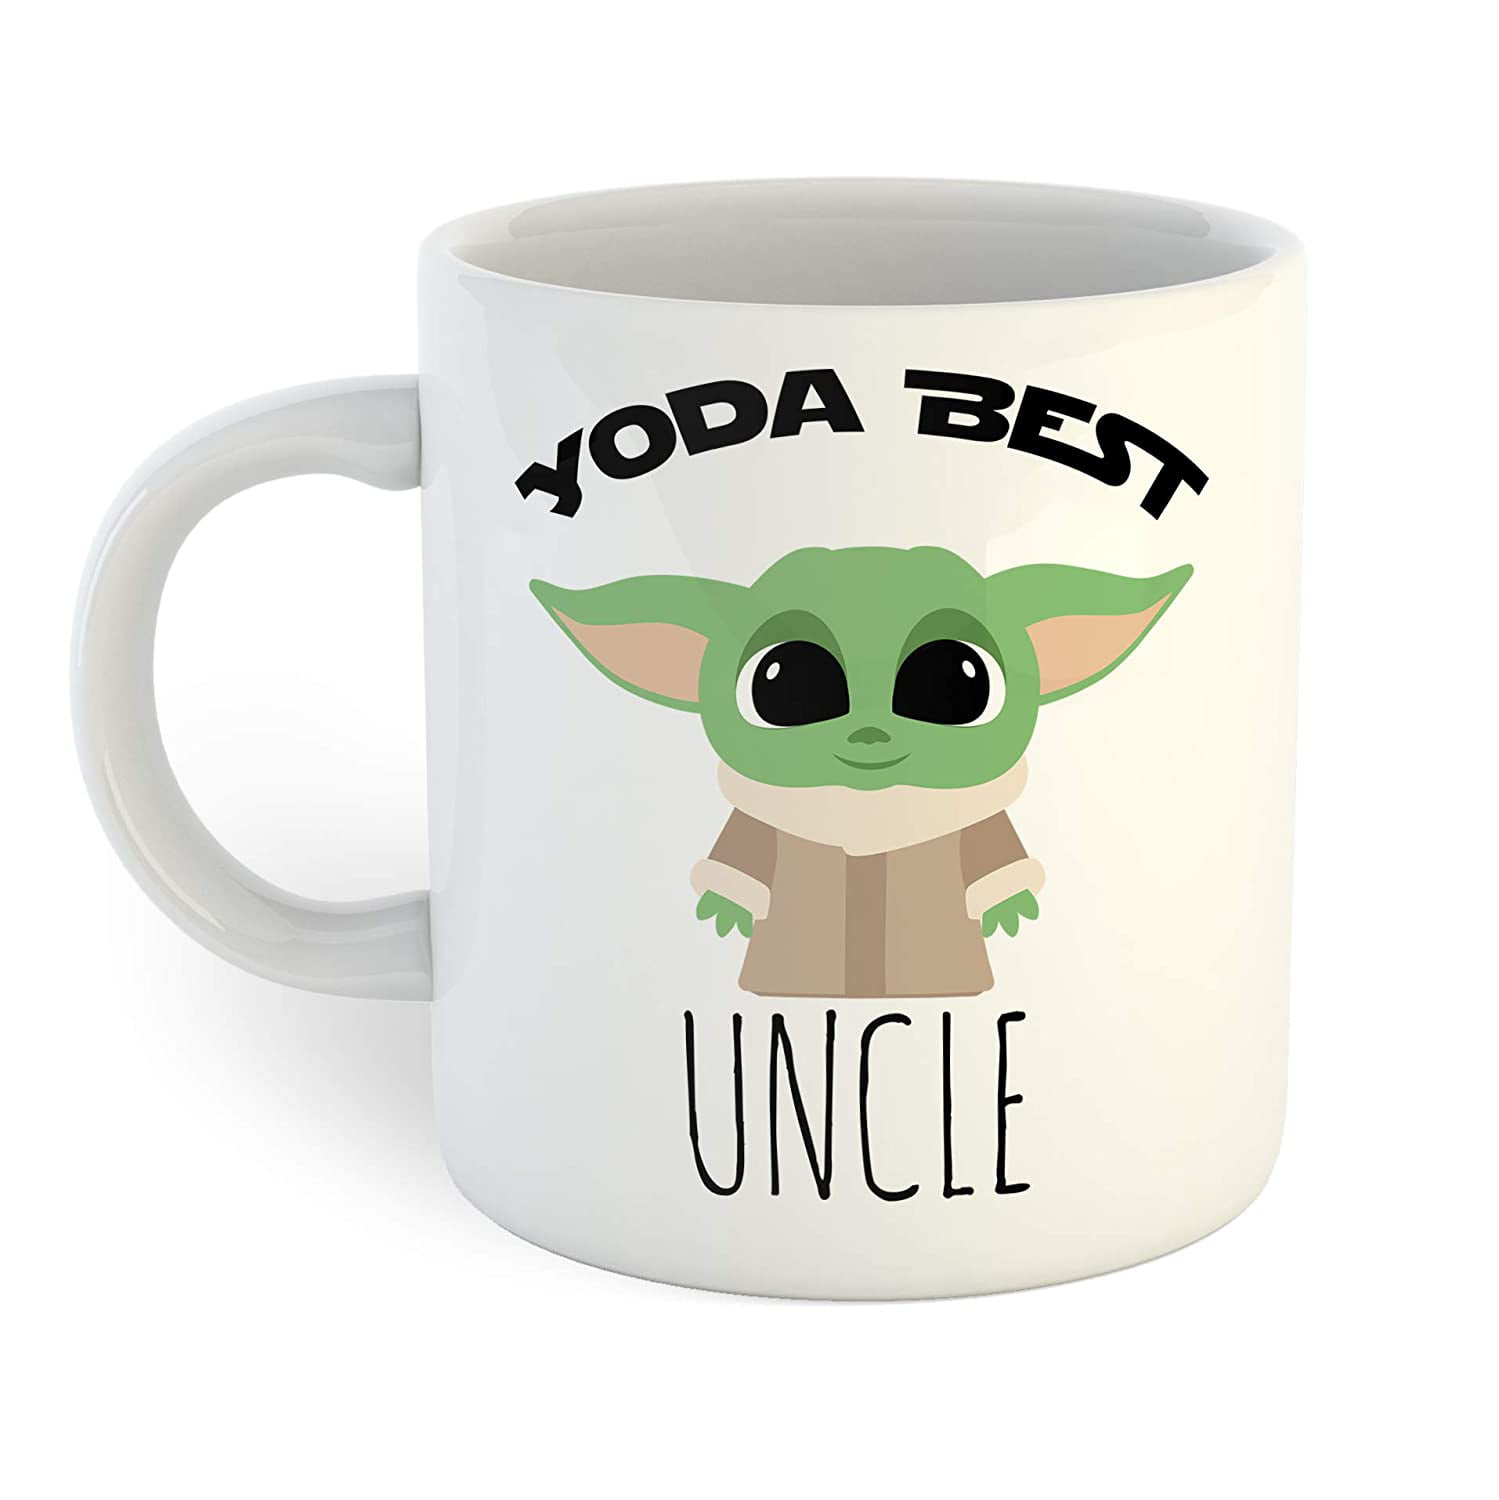 Details about   Yoda Best Uncle Mug Star Wars Yoda Mug Star Wars Mug Uncle Gift Father's Day 